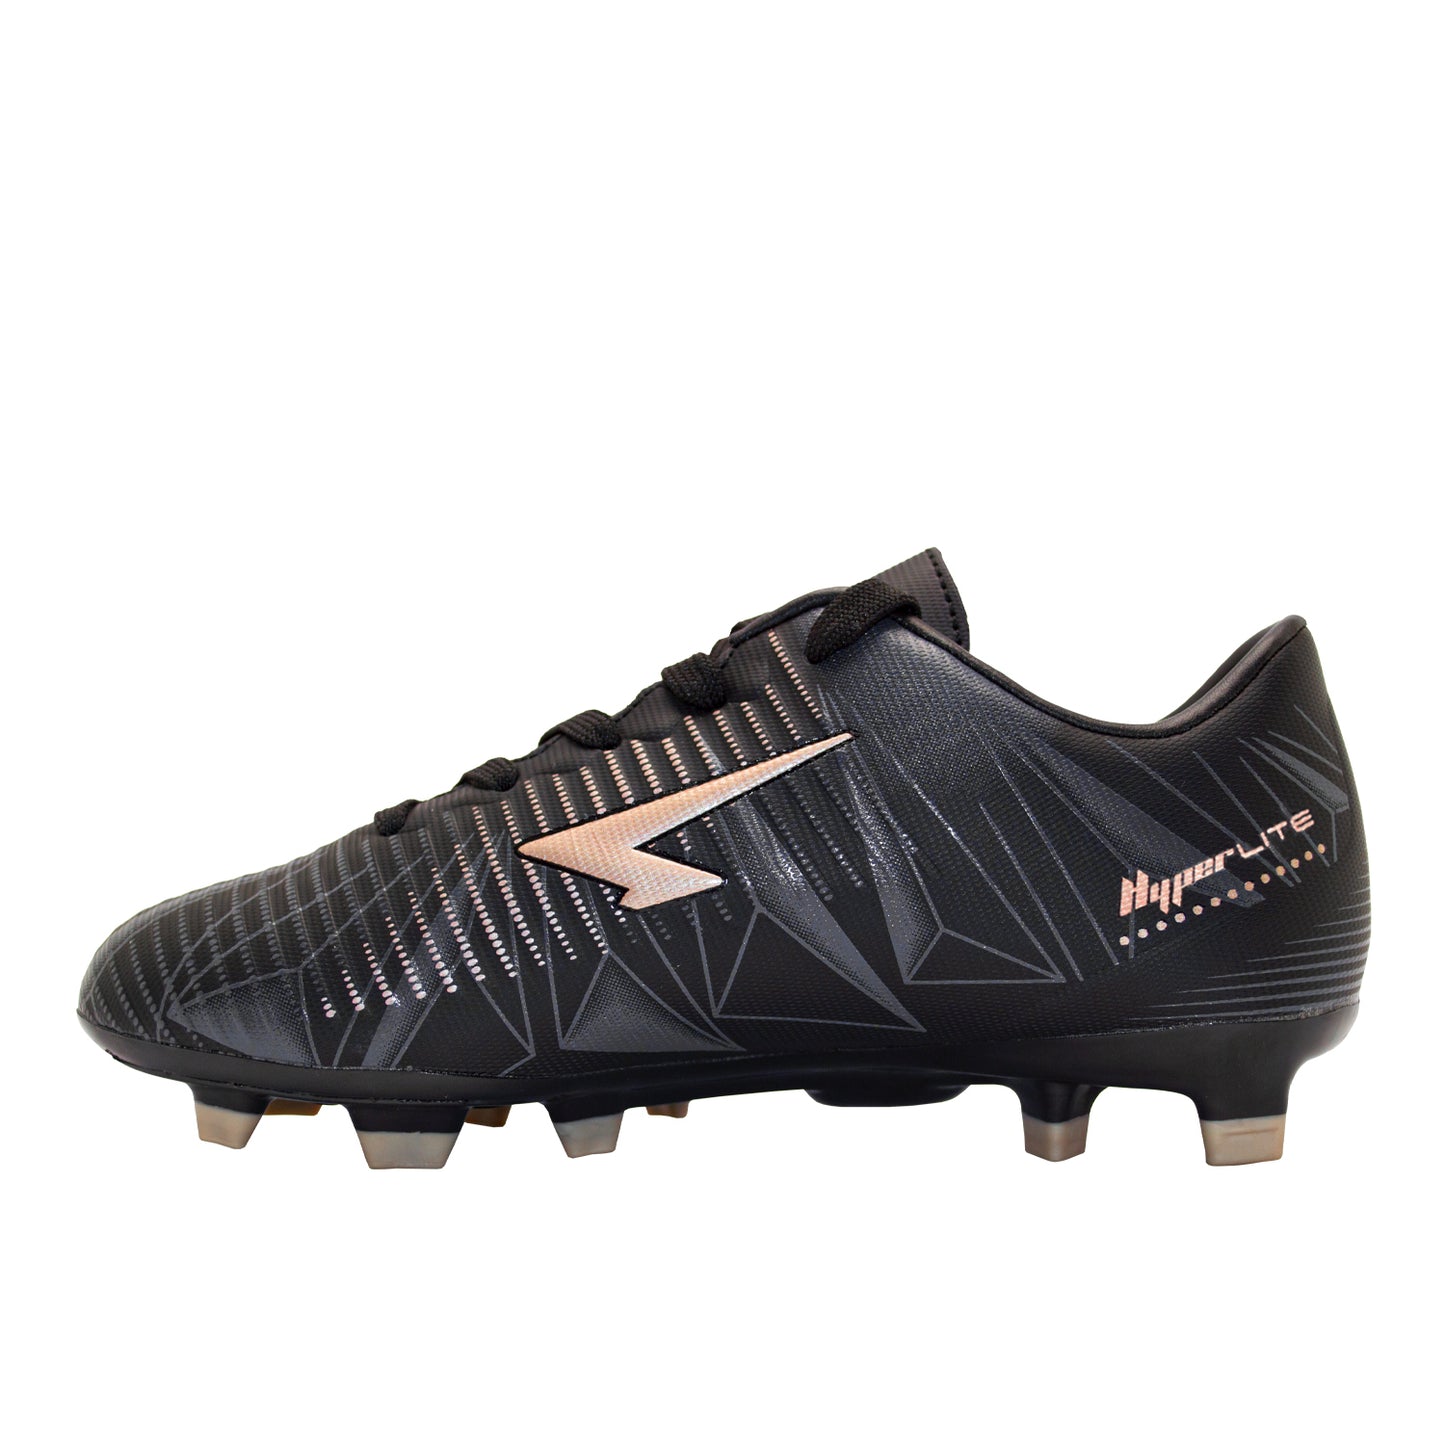 Laser Senior Football Boots - Black/Metallic Blush